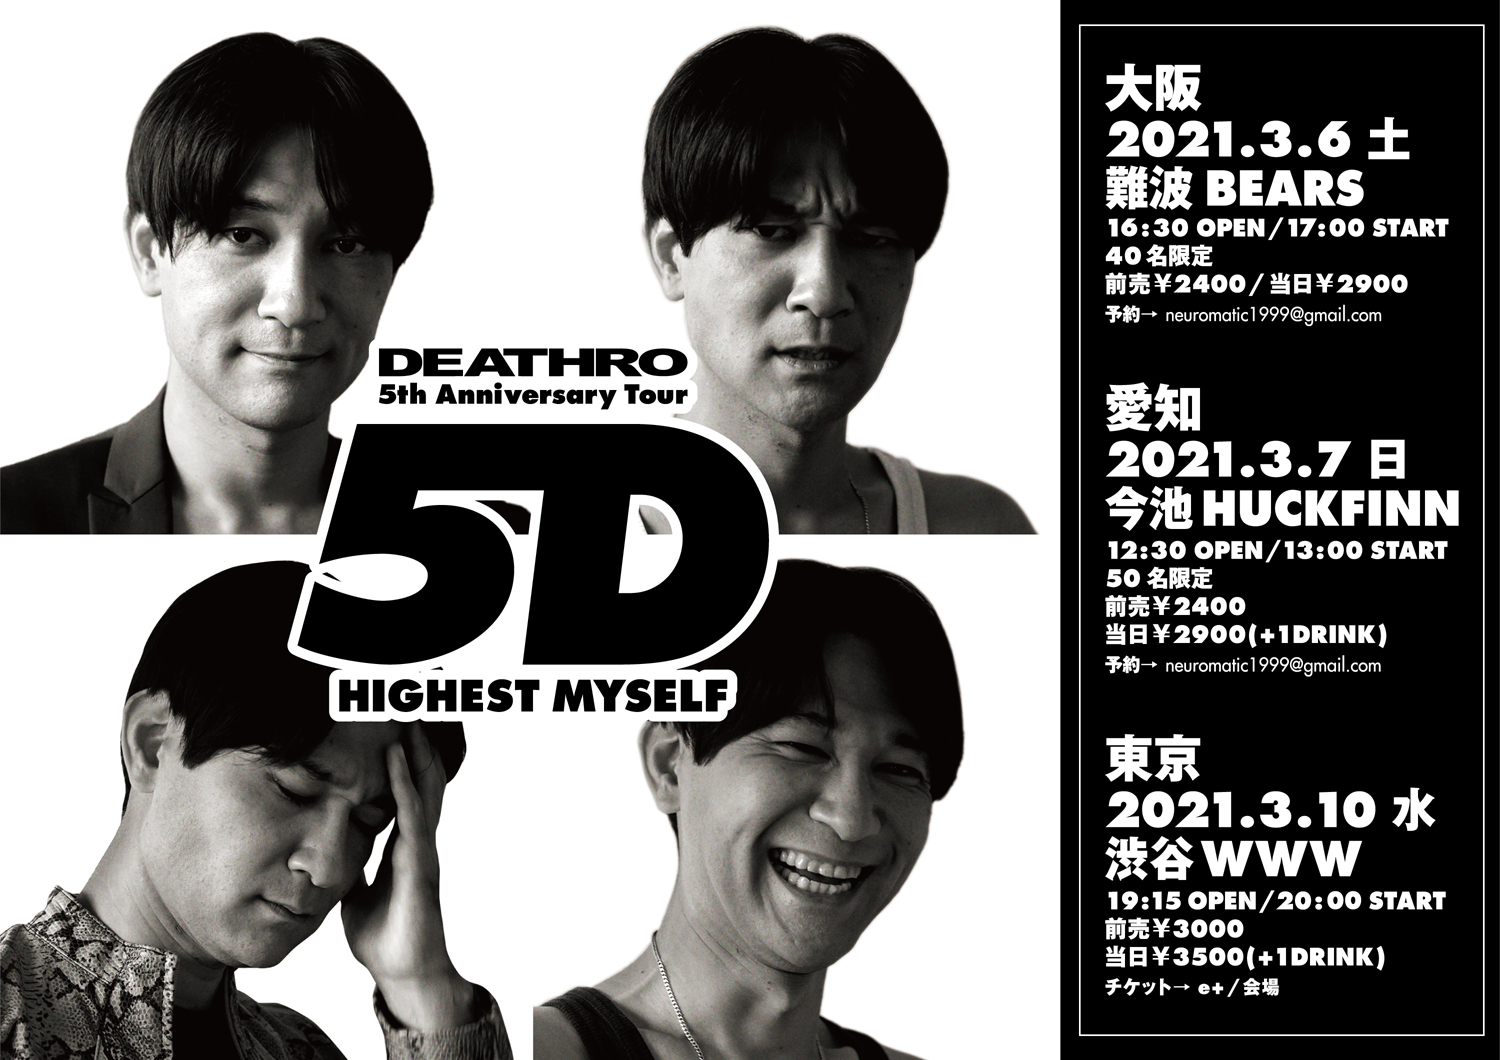 DEATHRO 5th Anniversary TOUR "5D" HIGHEST MYSELF